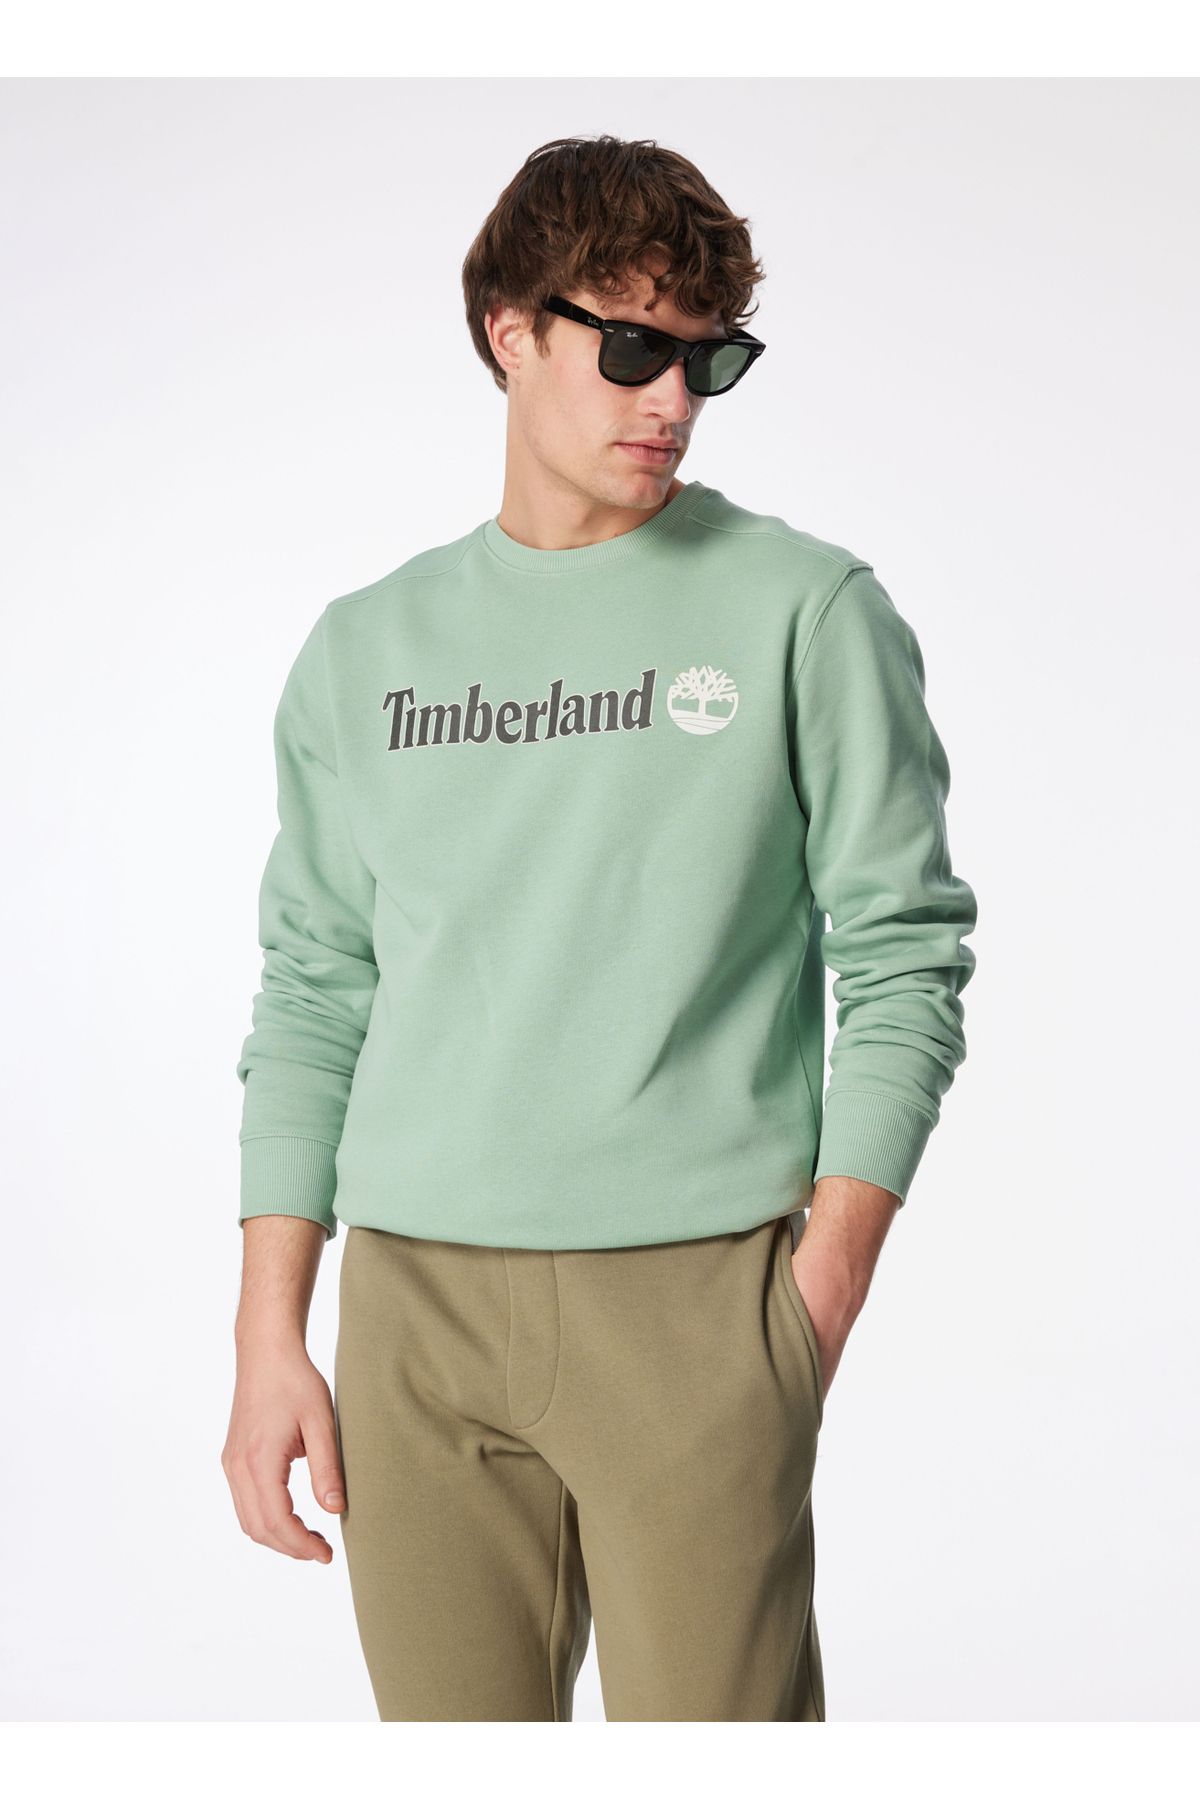 Timberland Sweatshirt, Xl, Yeşil